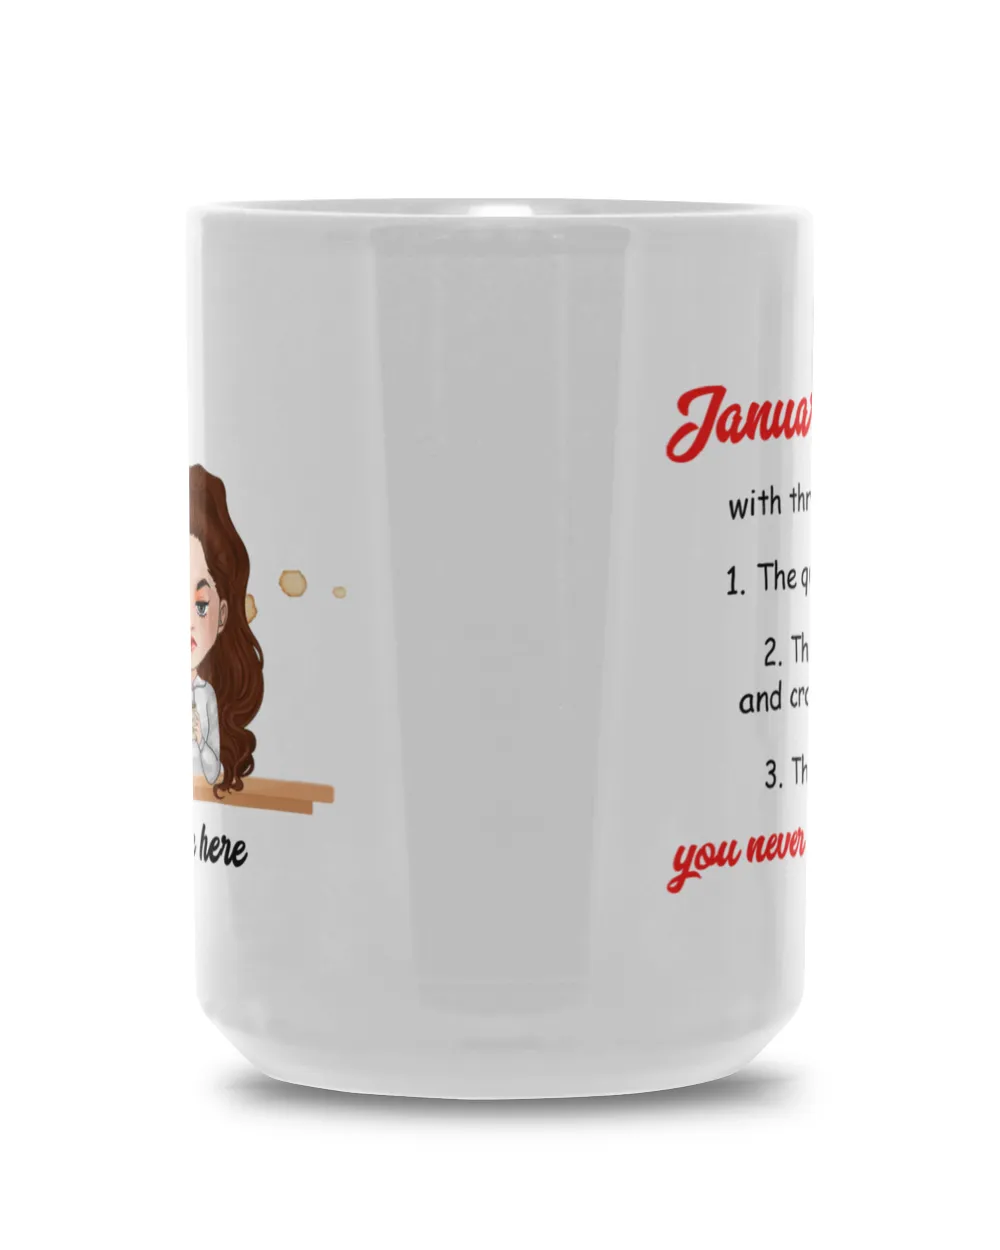 Grumpy Girl Coffee Custom Mug January Girl With Three Sides Personalized Gift